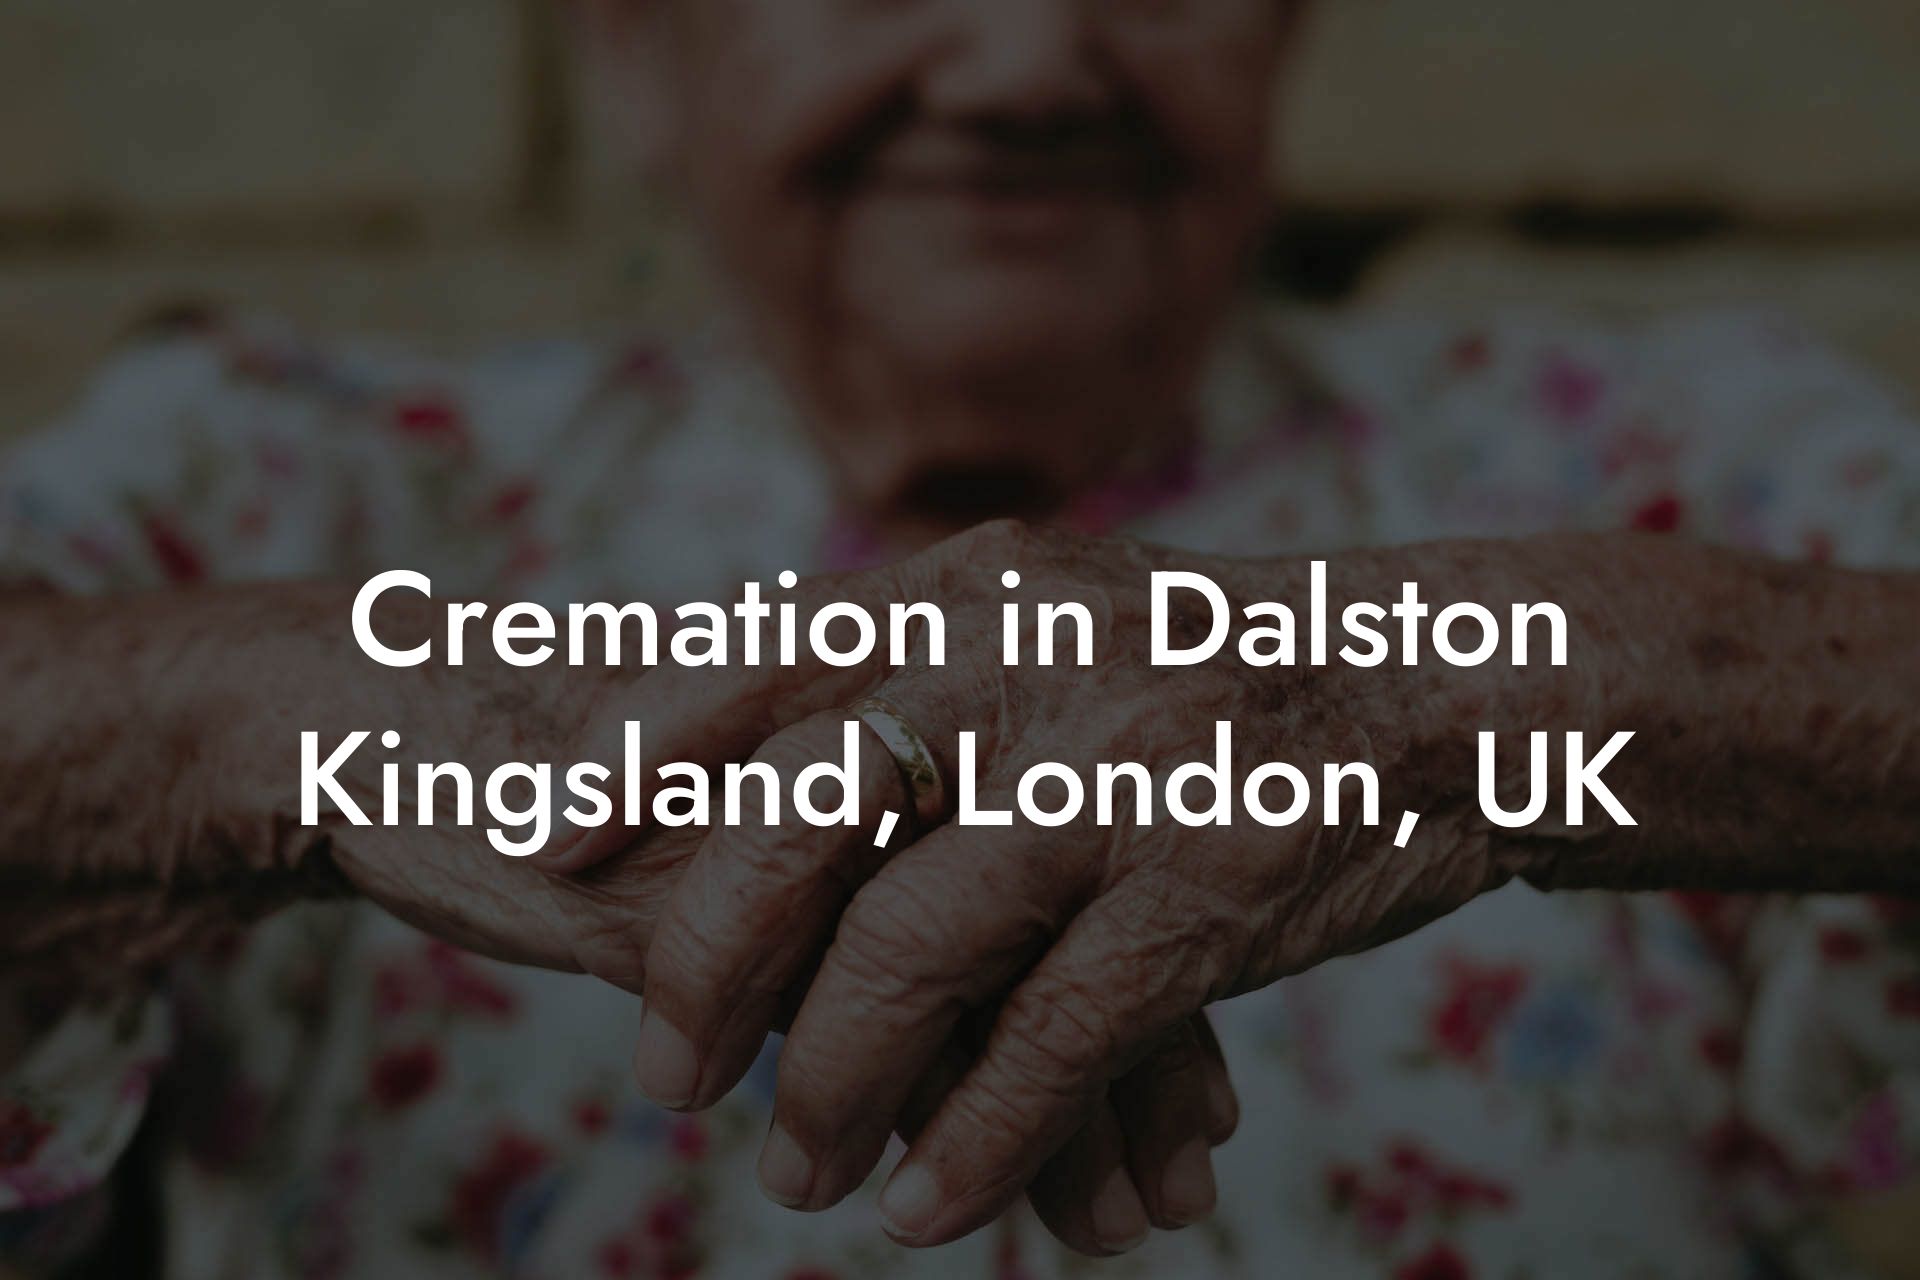 Cremation in Dalston Kingsland, London, UK